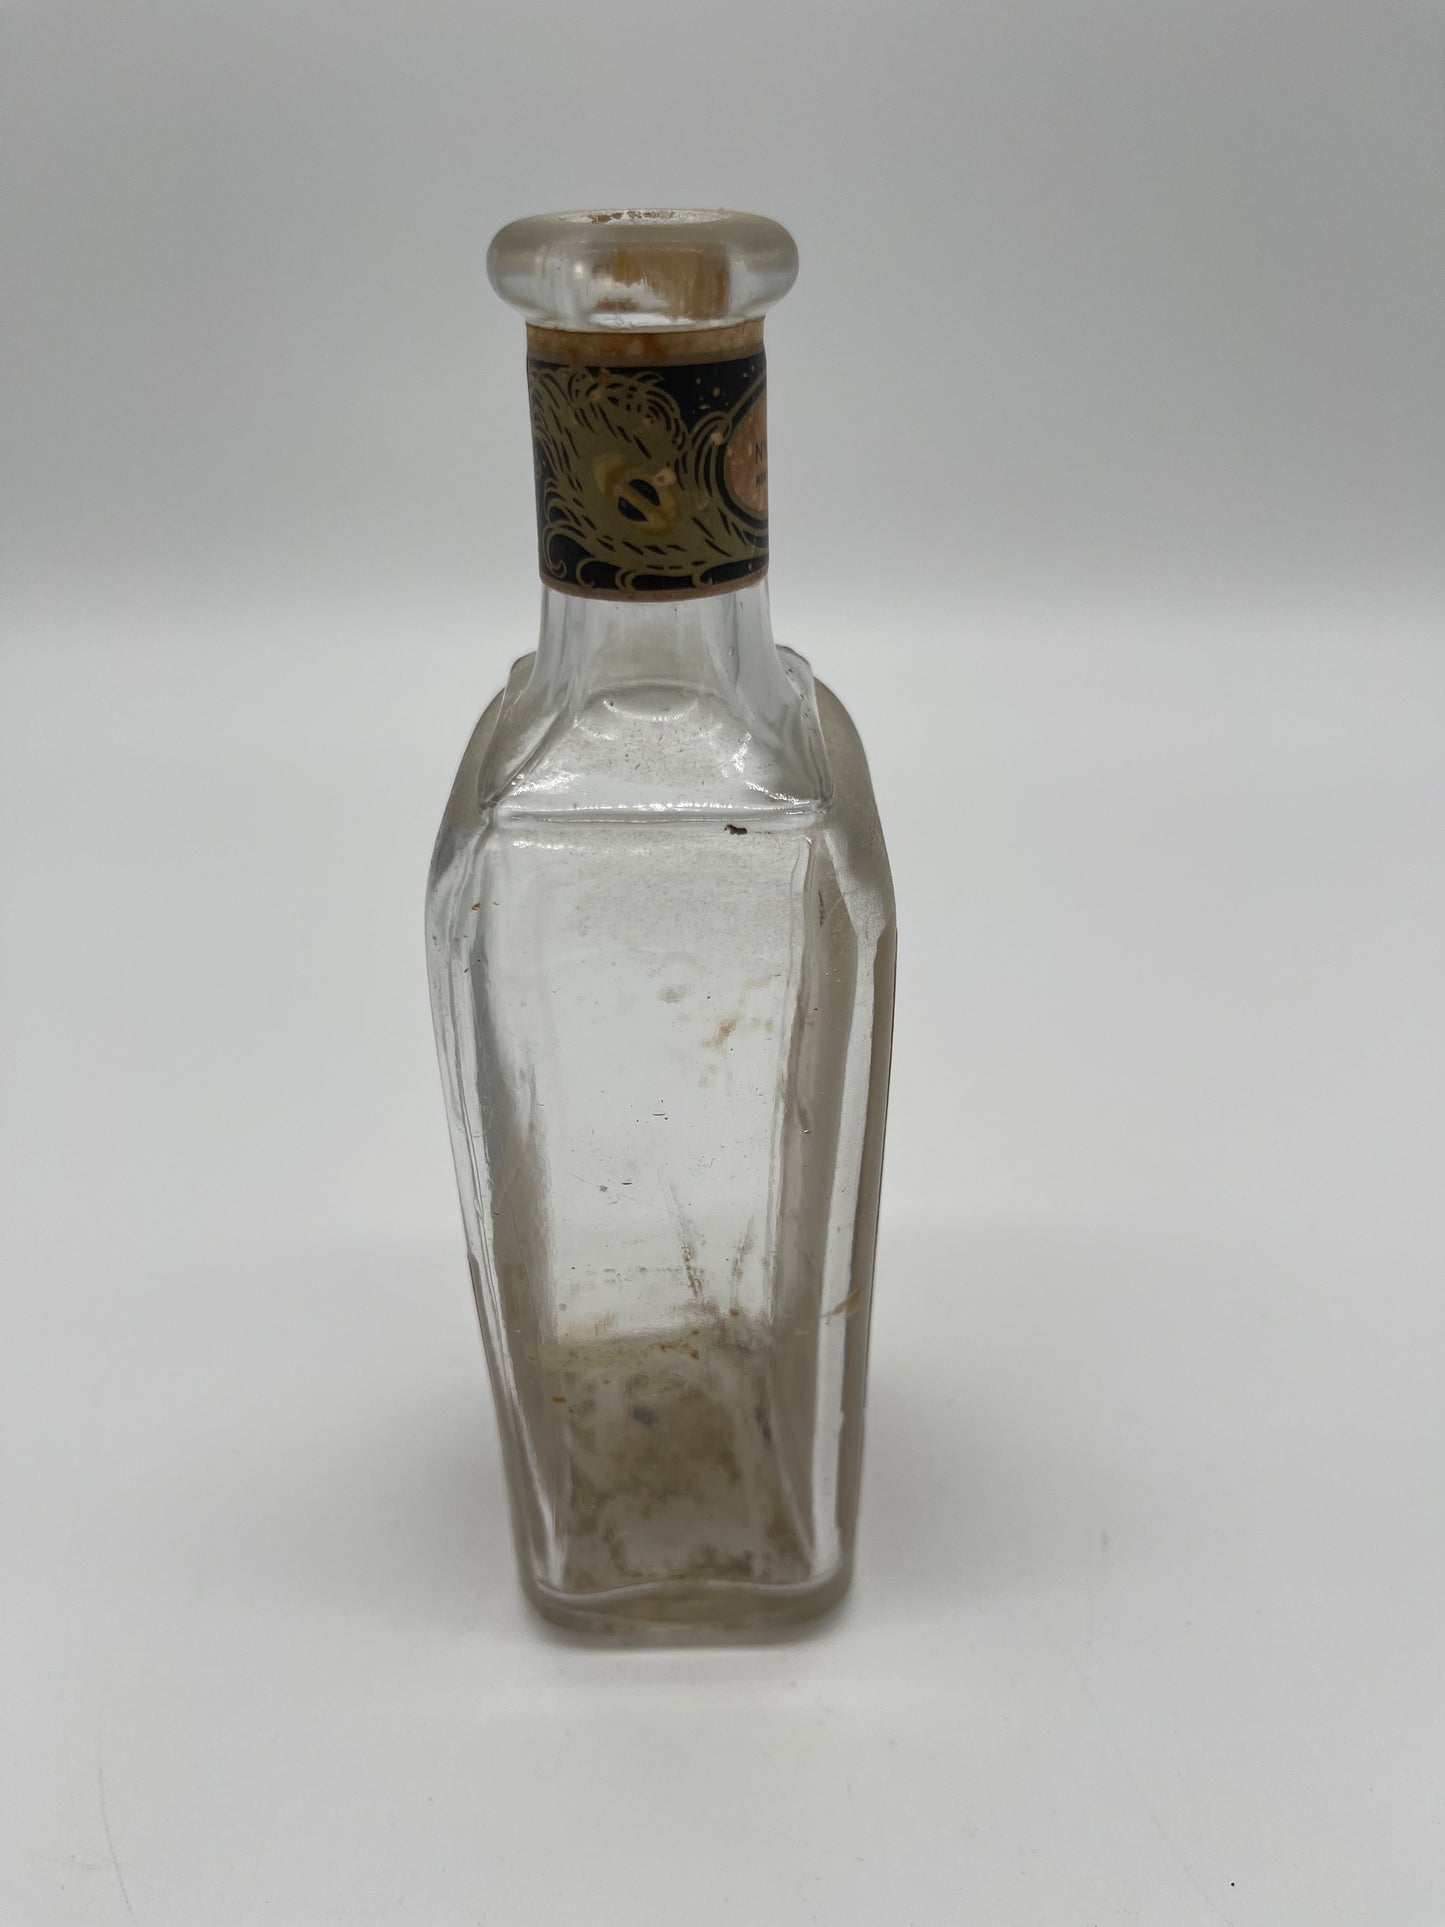 Vintage Nylotis Quinine & Sage Hair Tonic Bottle (Item Number 0109)